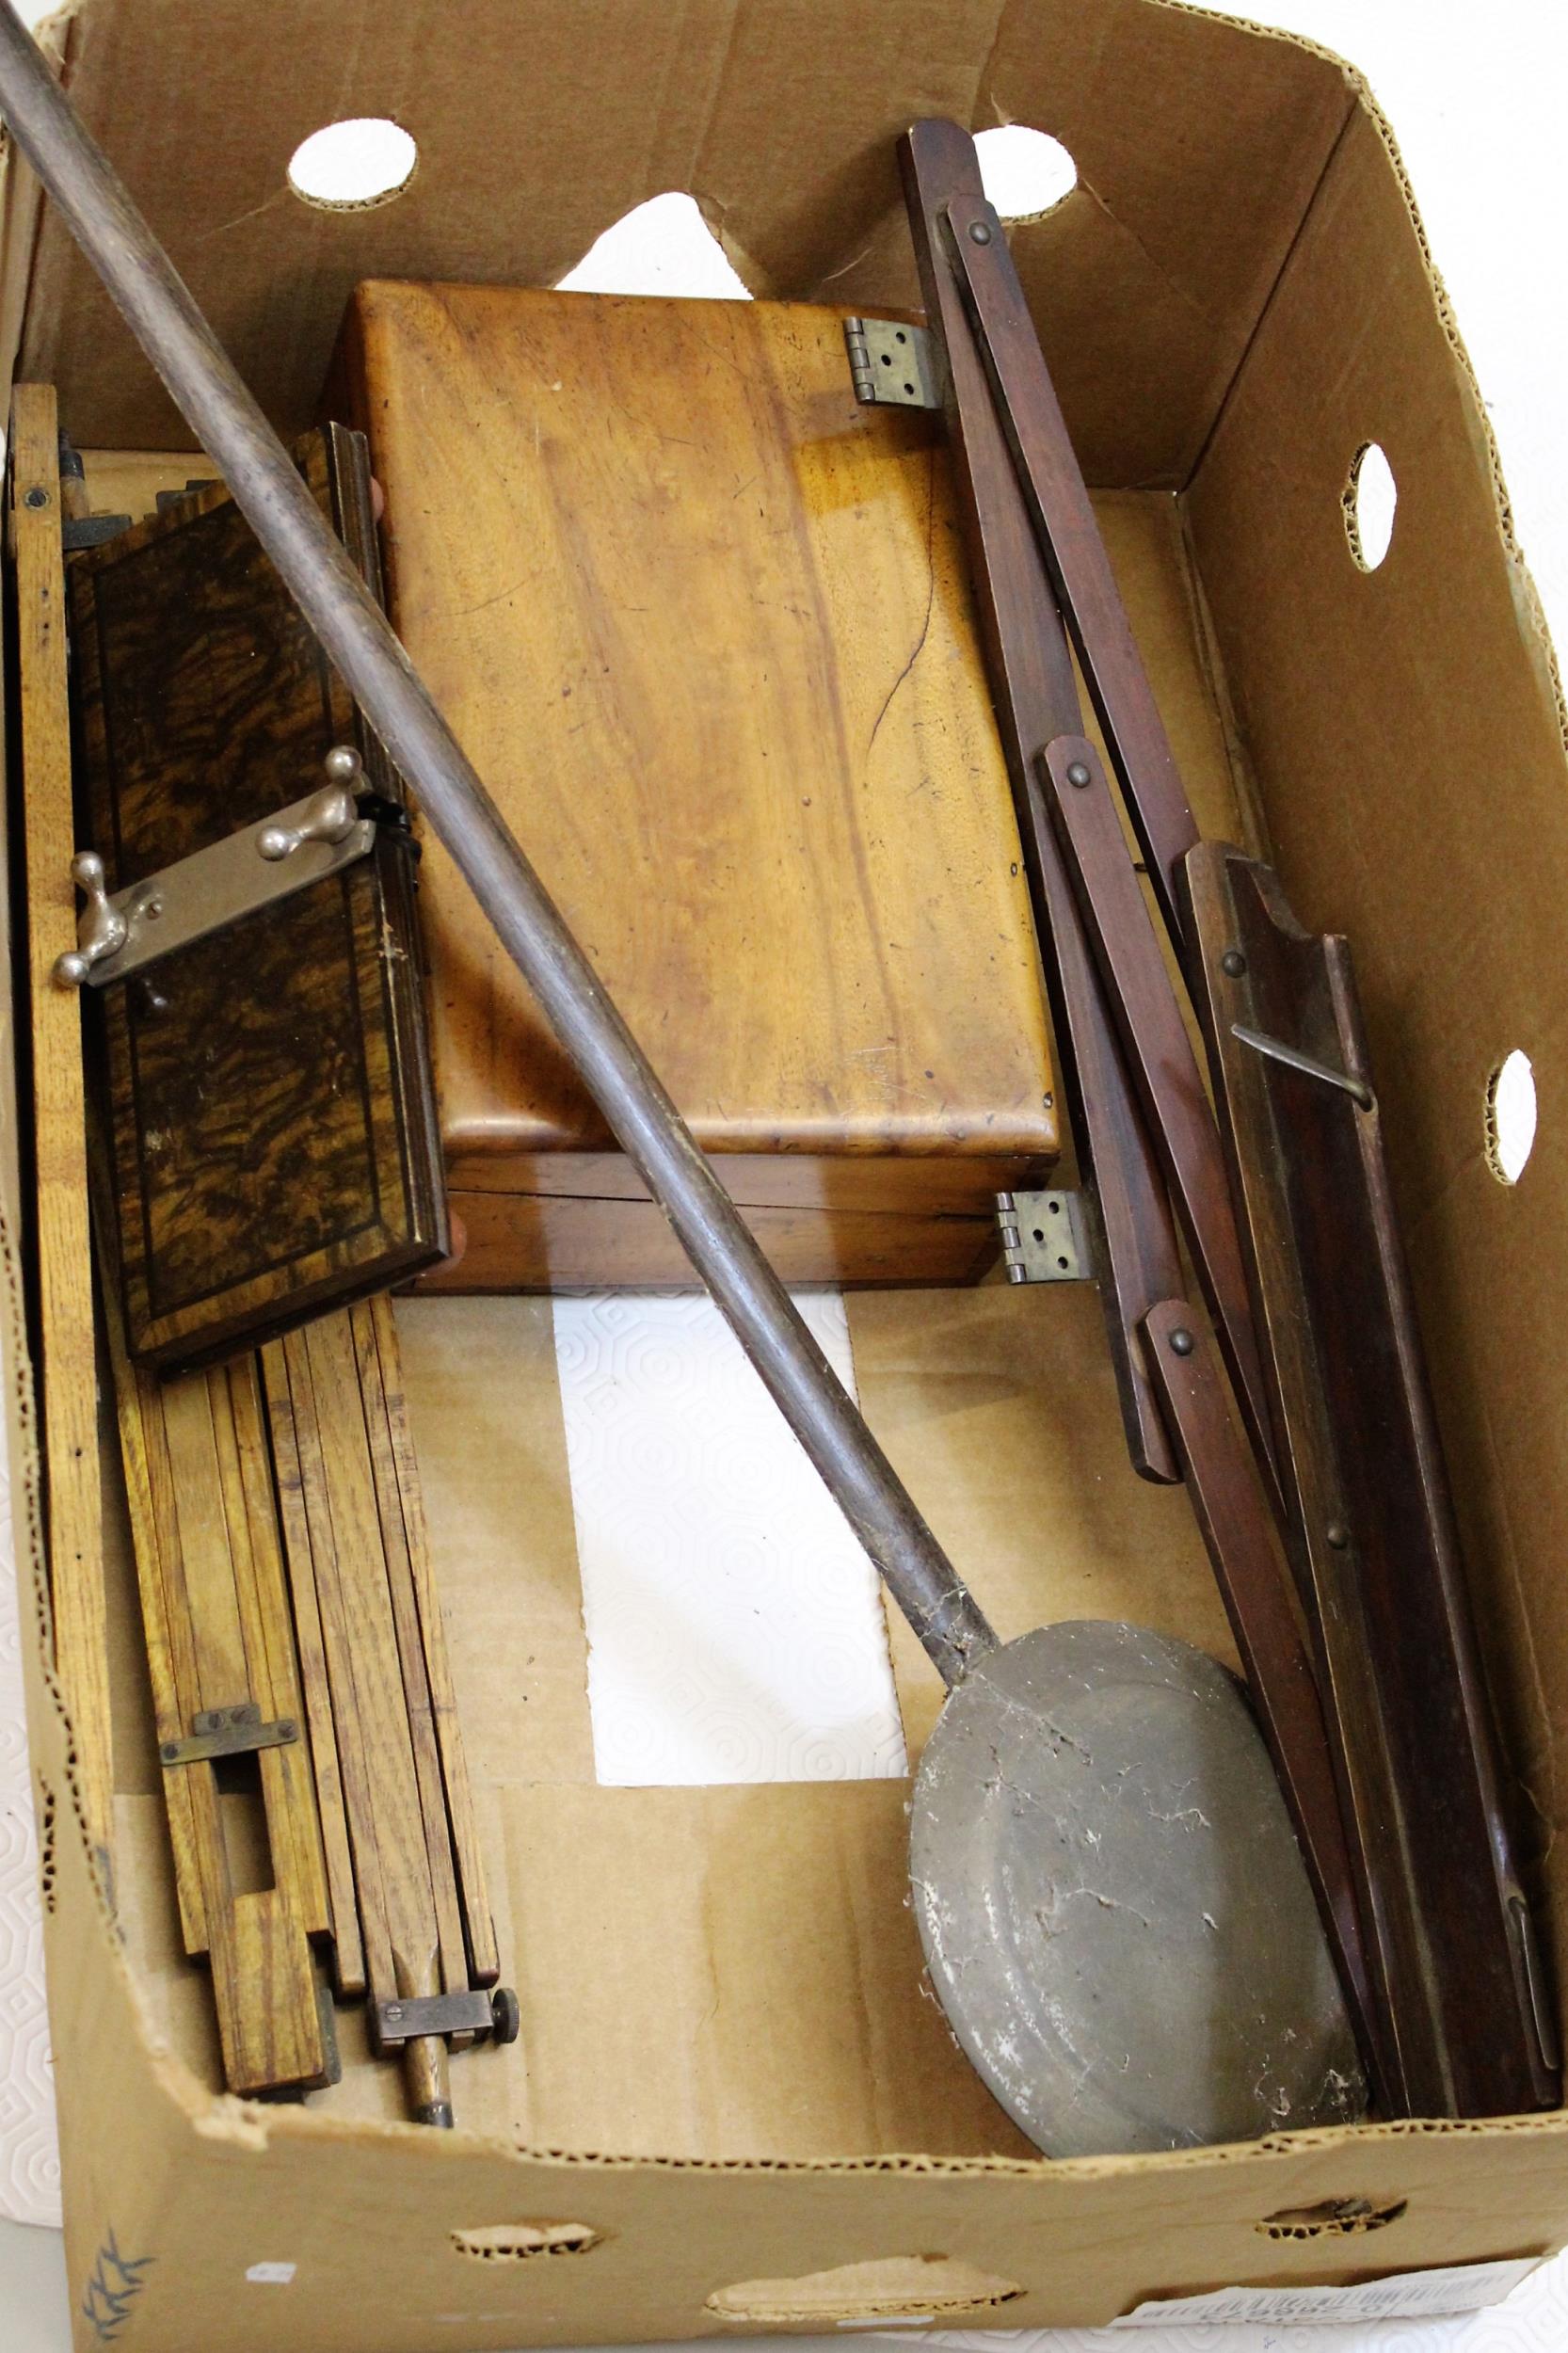 Late 19th / early 20th Century walnut writing box (at fault), small glove press, longcase clock